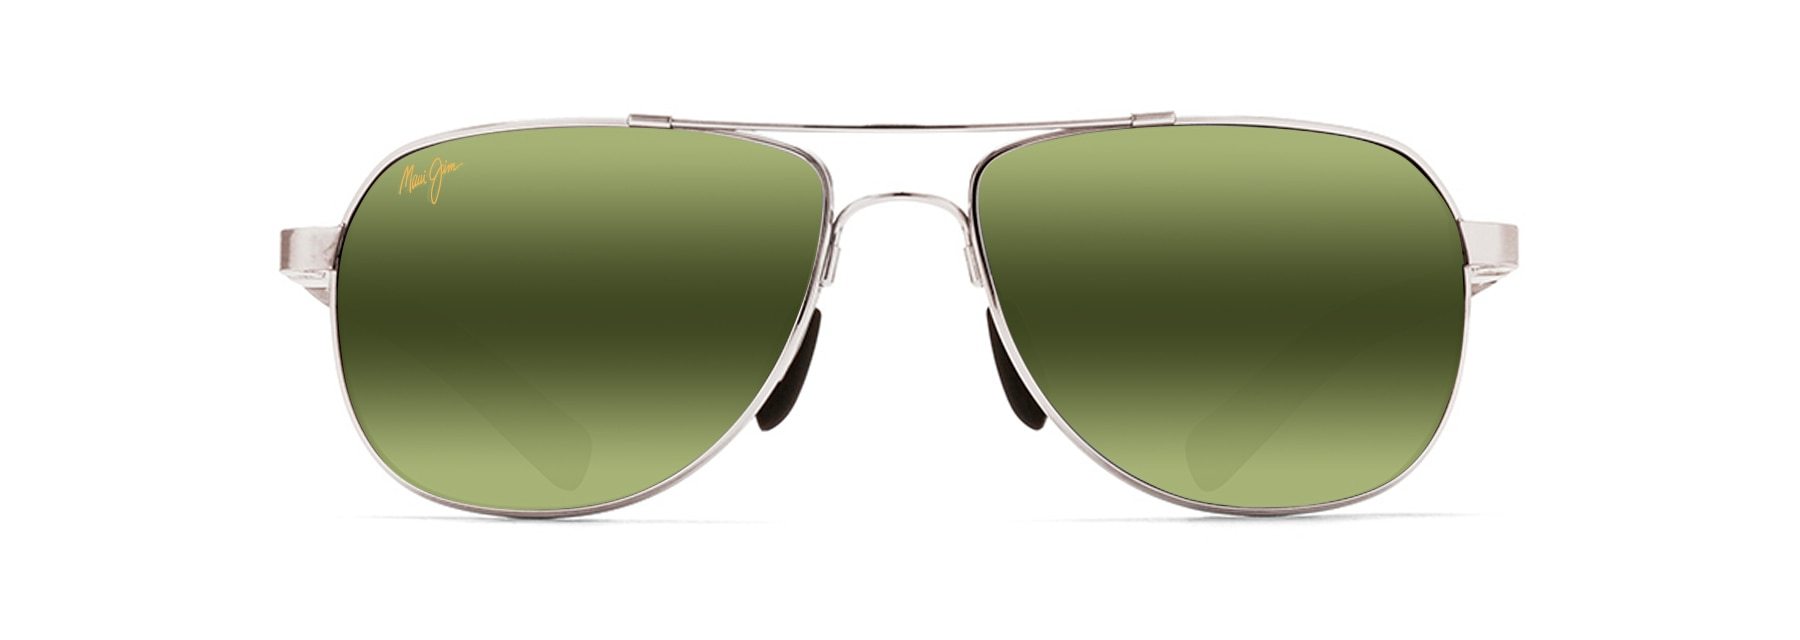 MyMaui Guardrails MM327-004 Sunglasses